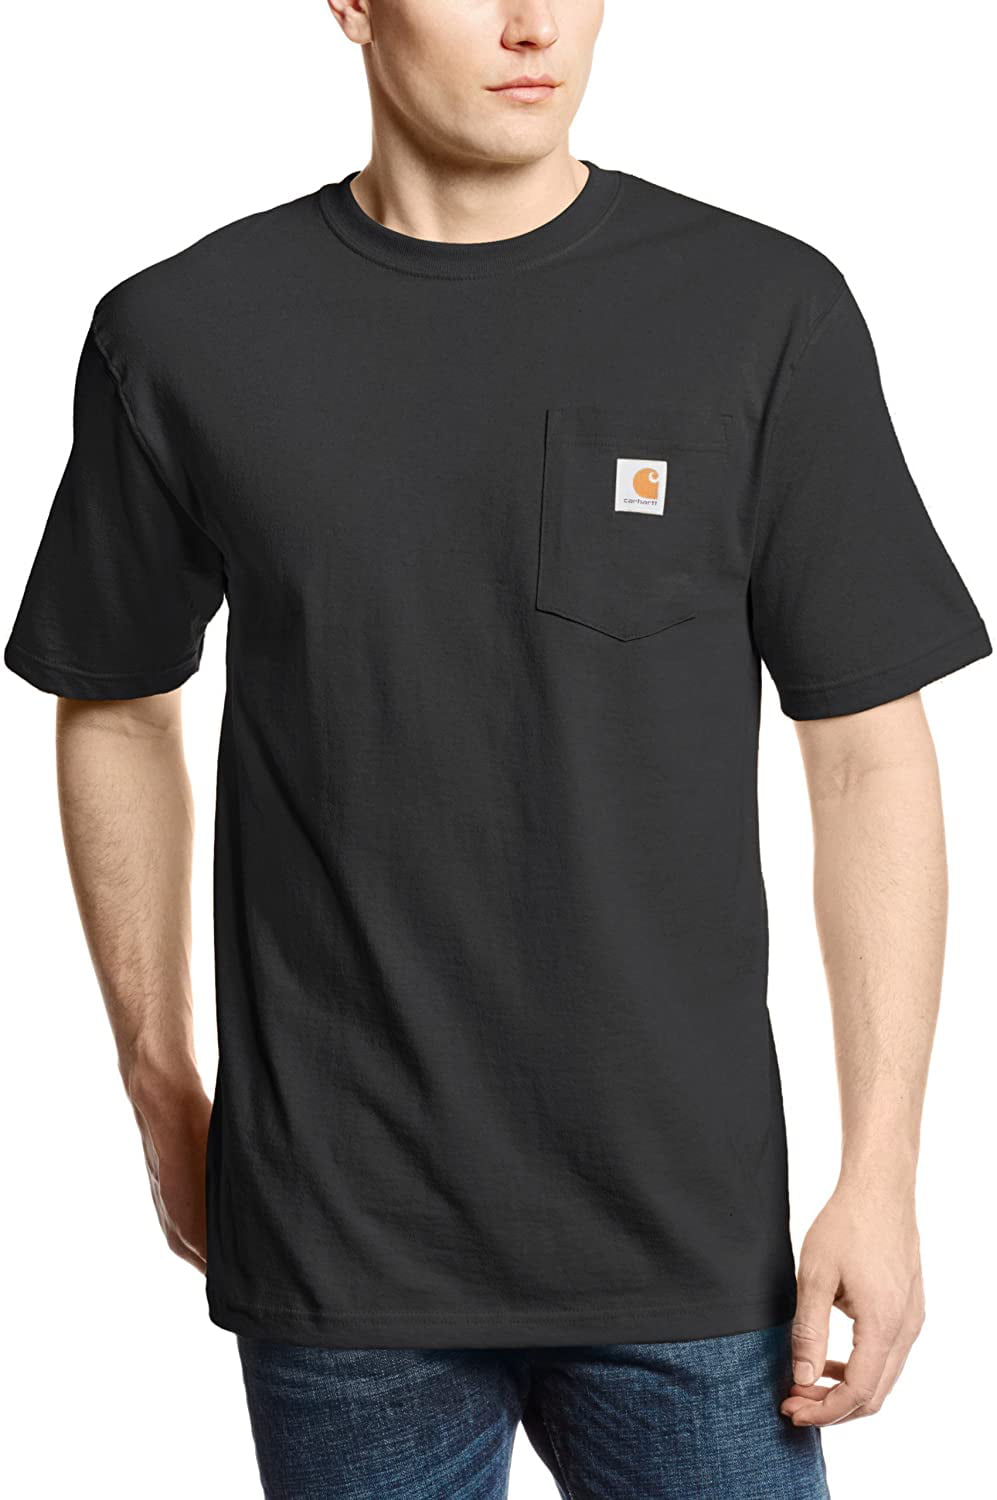 Carhartt Men's 'K87' Workwear Pocket Short-Sleeve T-Shirt, Black, Large ...